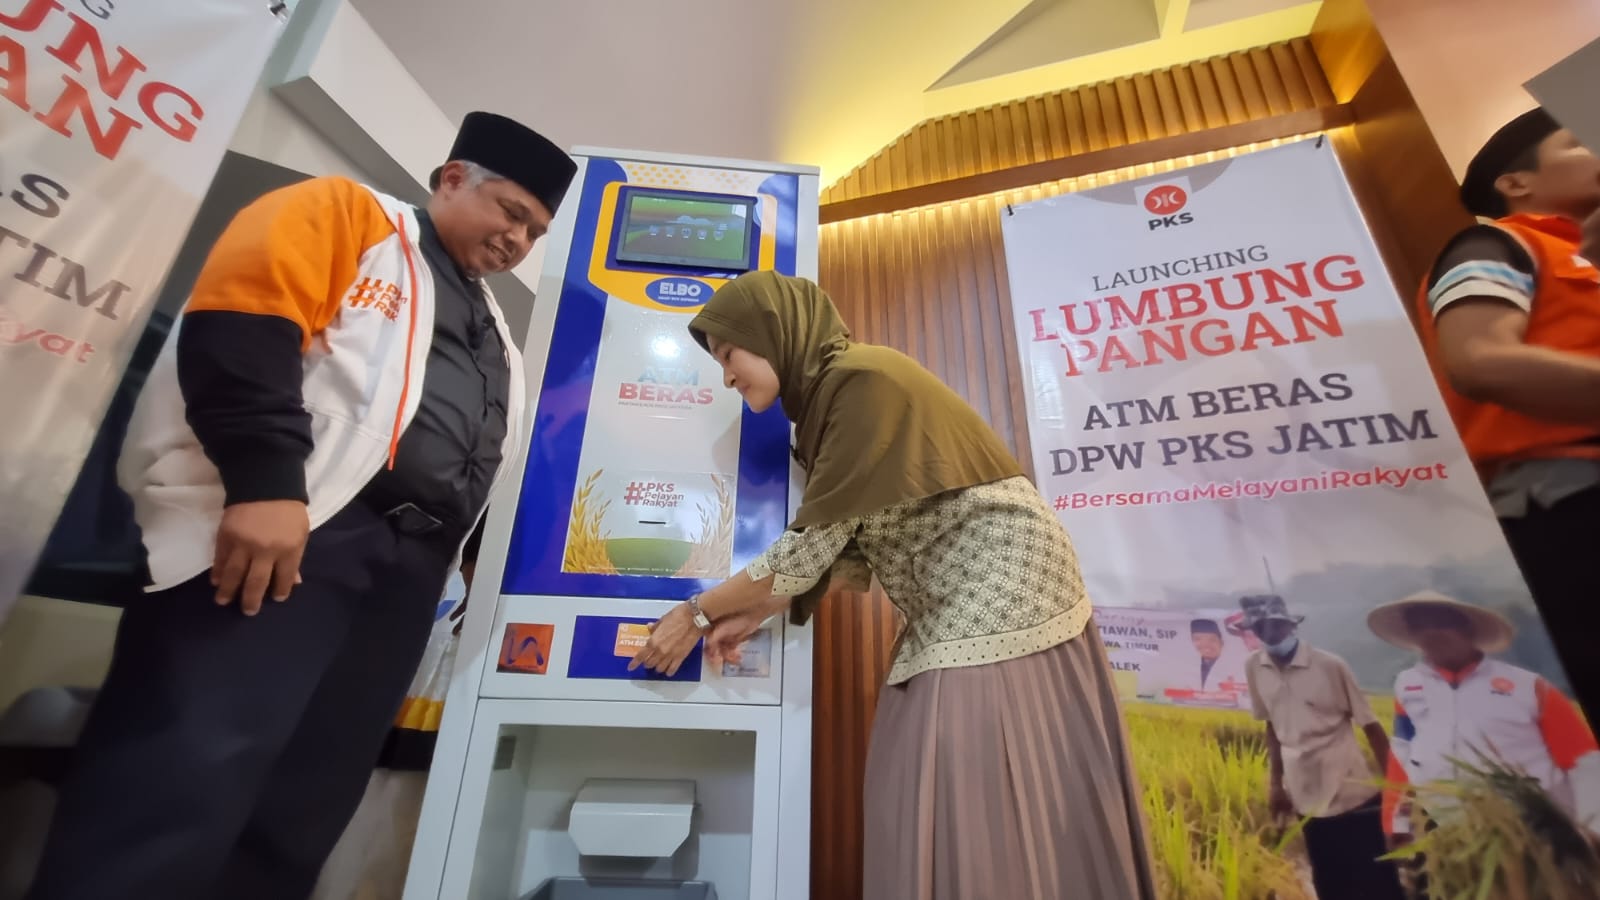 Politik Pemberdayaan, PKS Jatim Launching Lumbung Pangan berupa ATM Beras